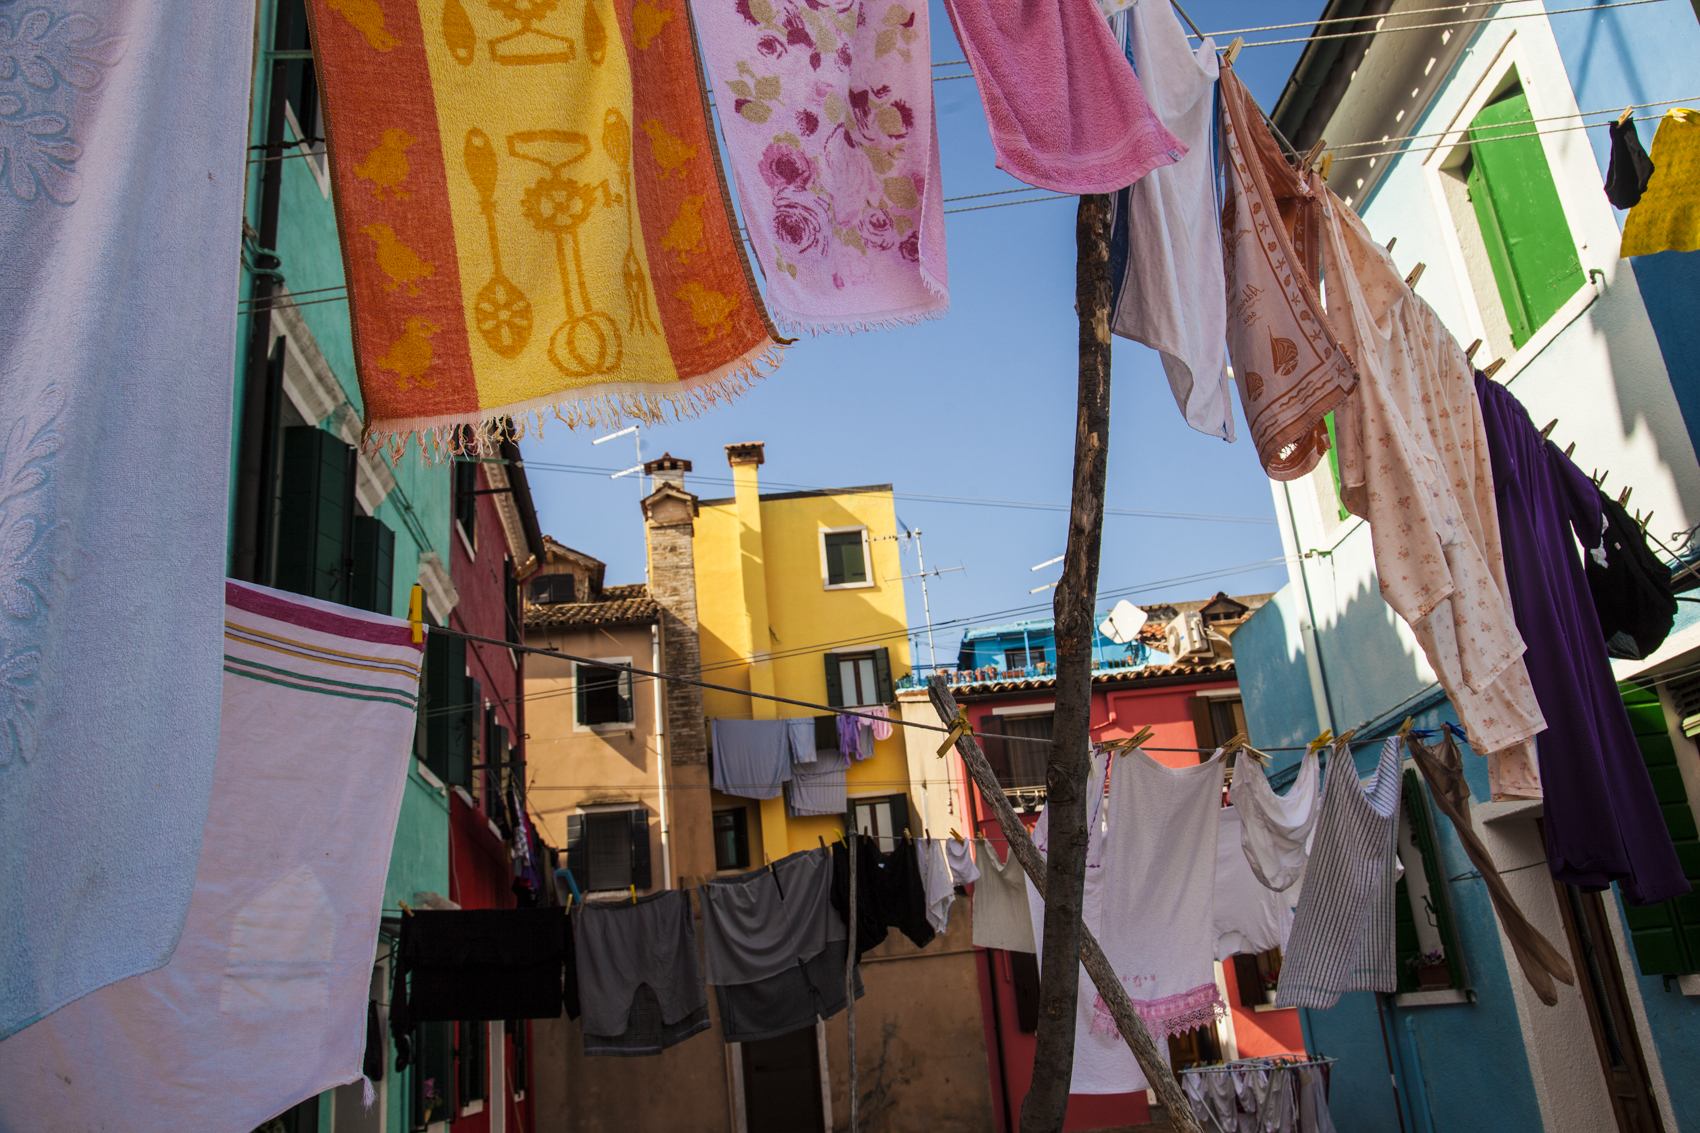 Laundry day, Burano